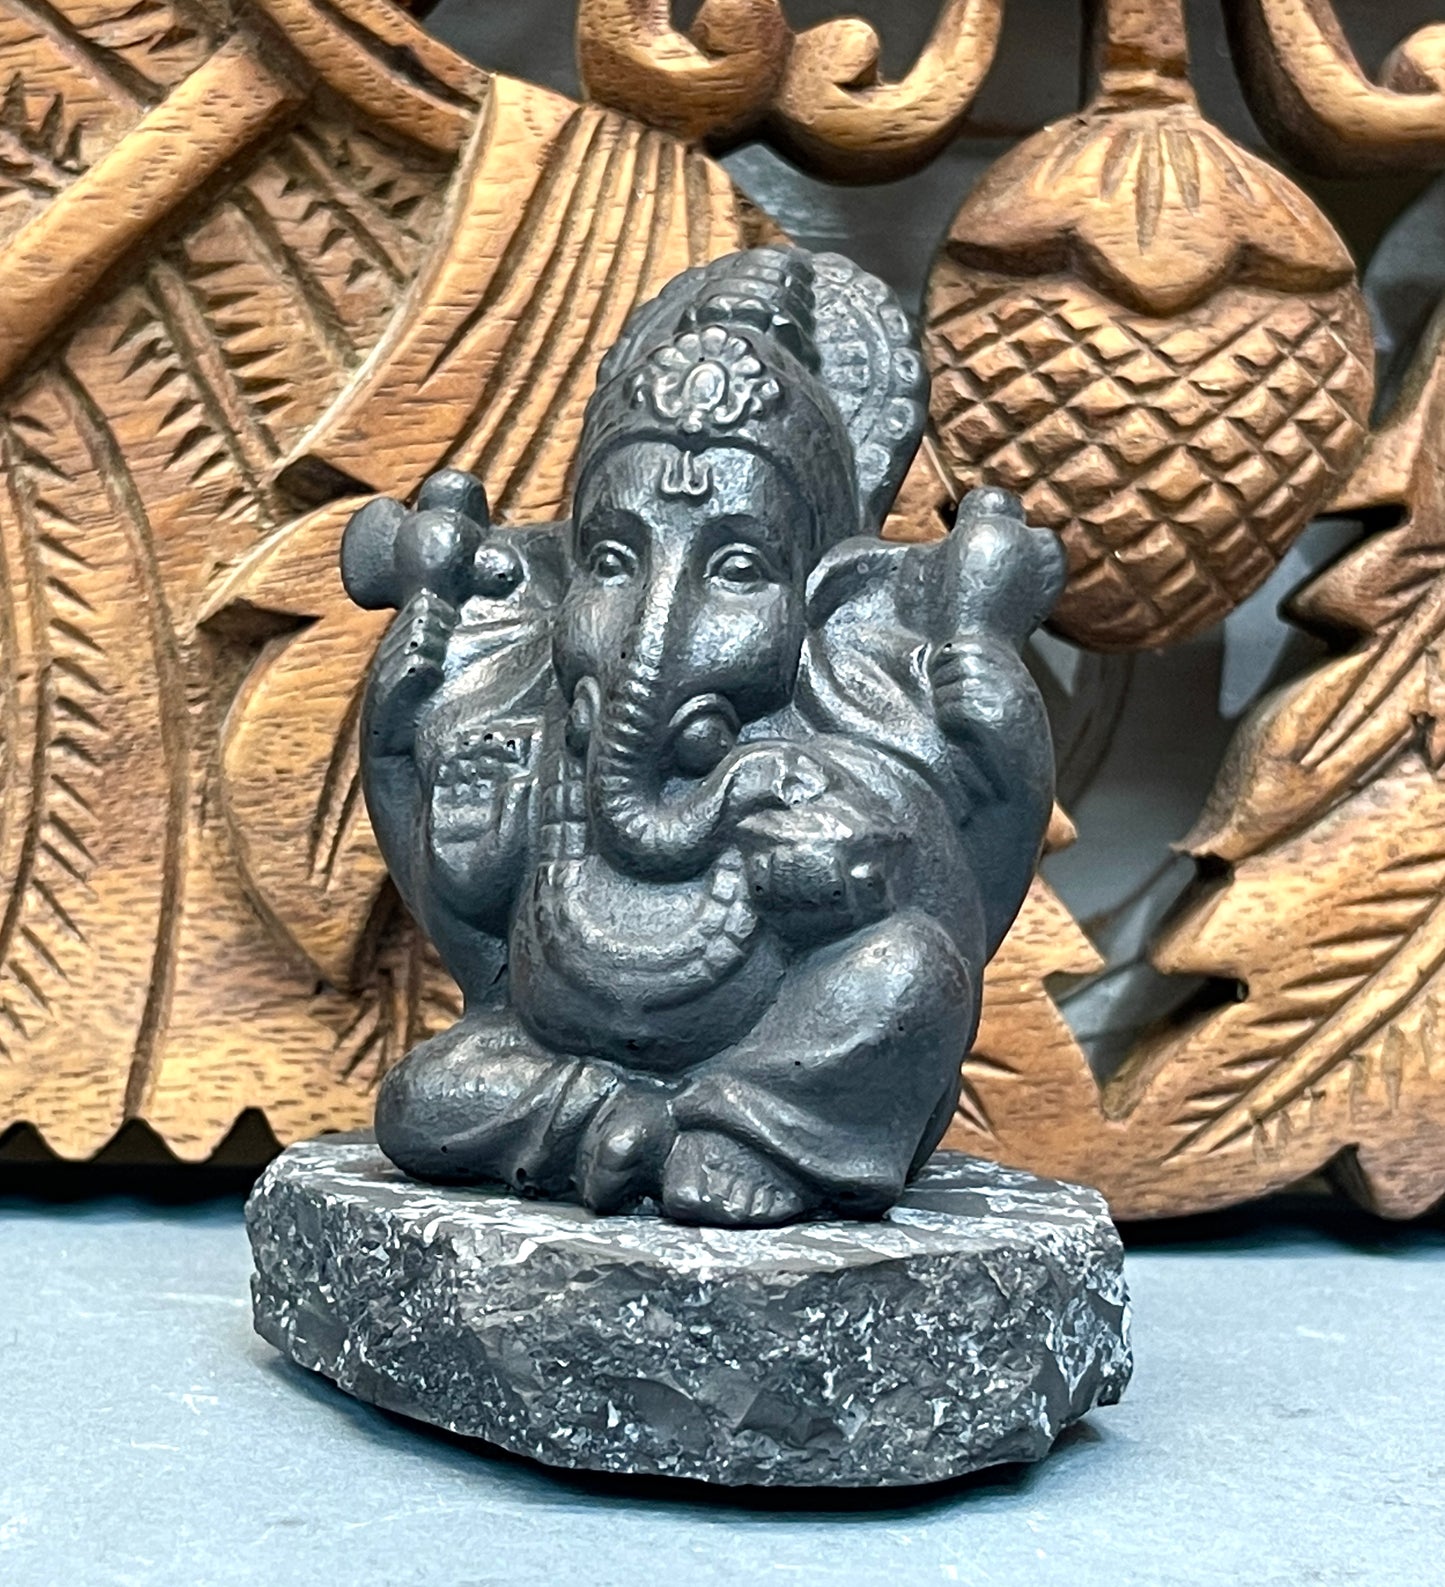 Shungite Buddha & Ganesh